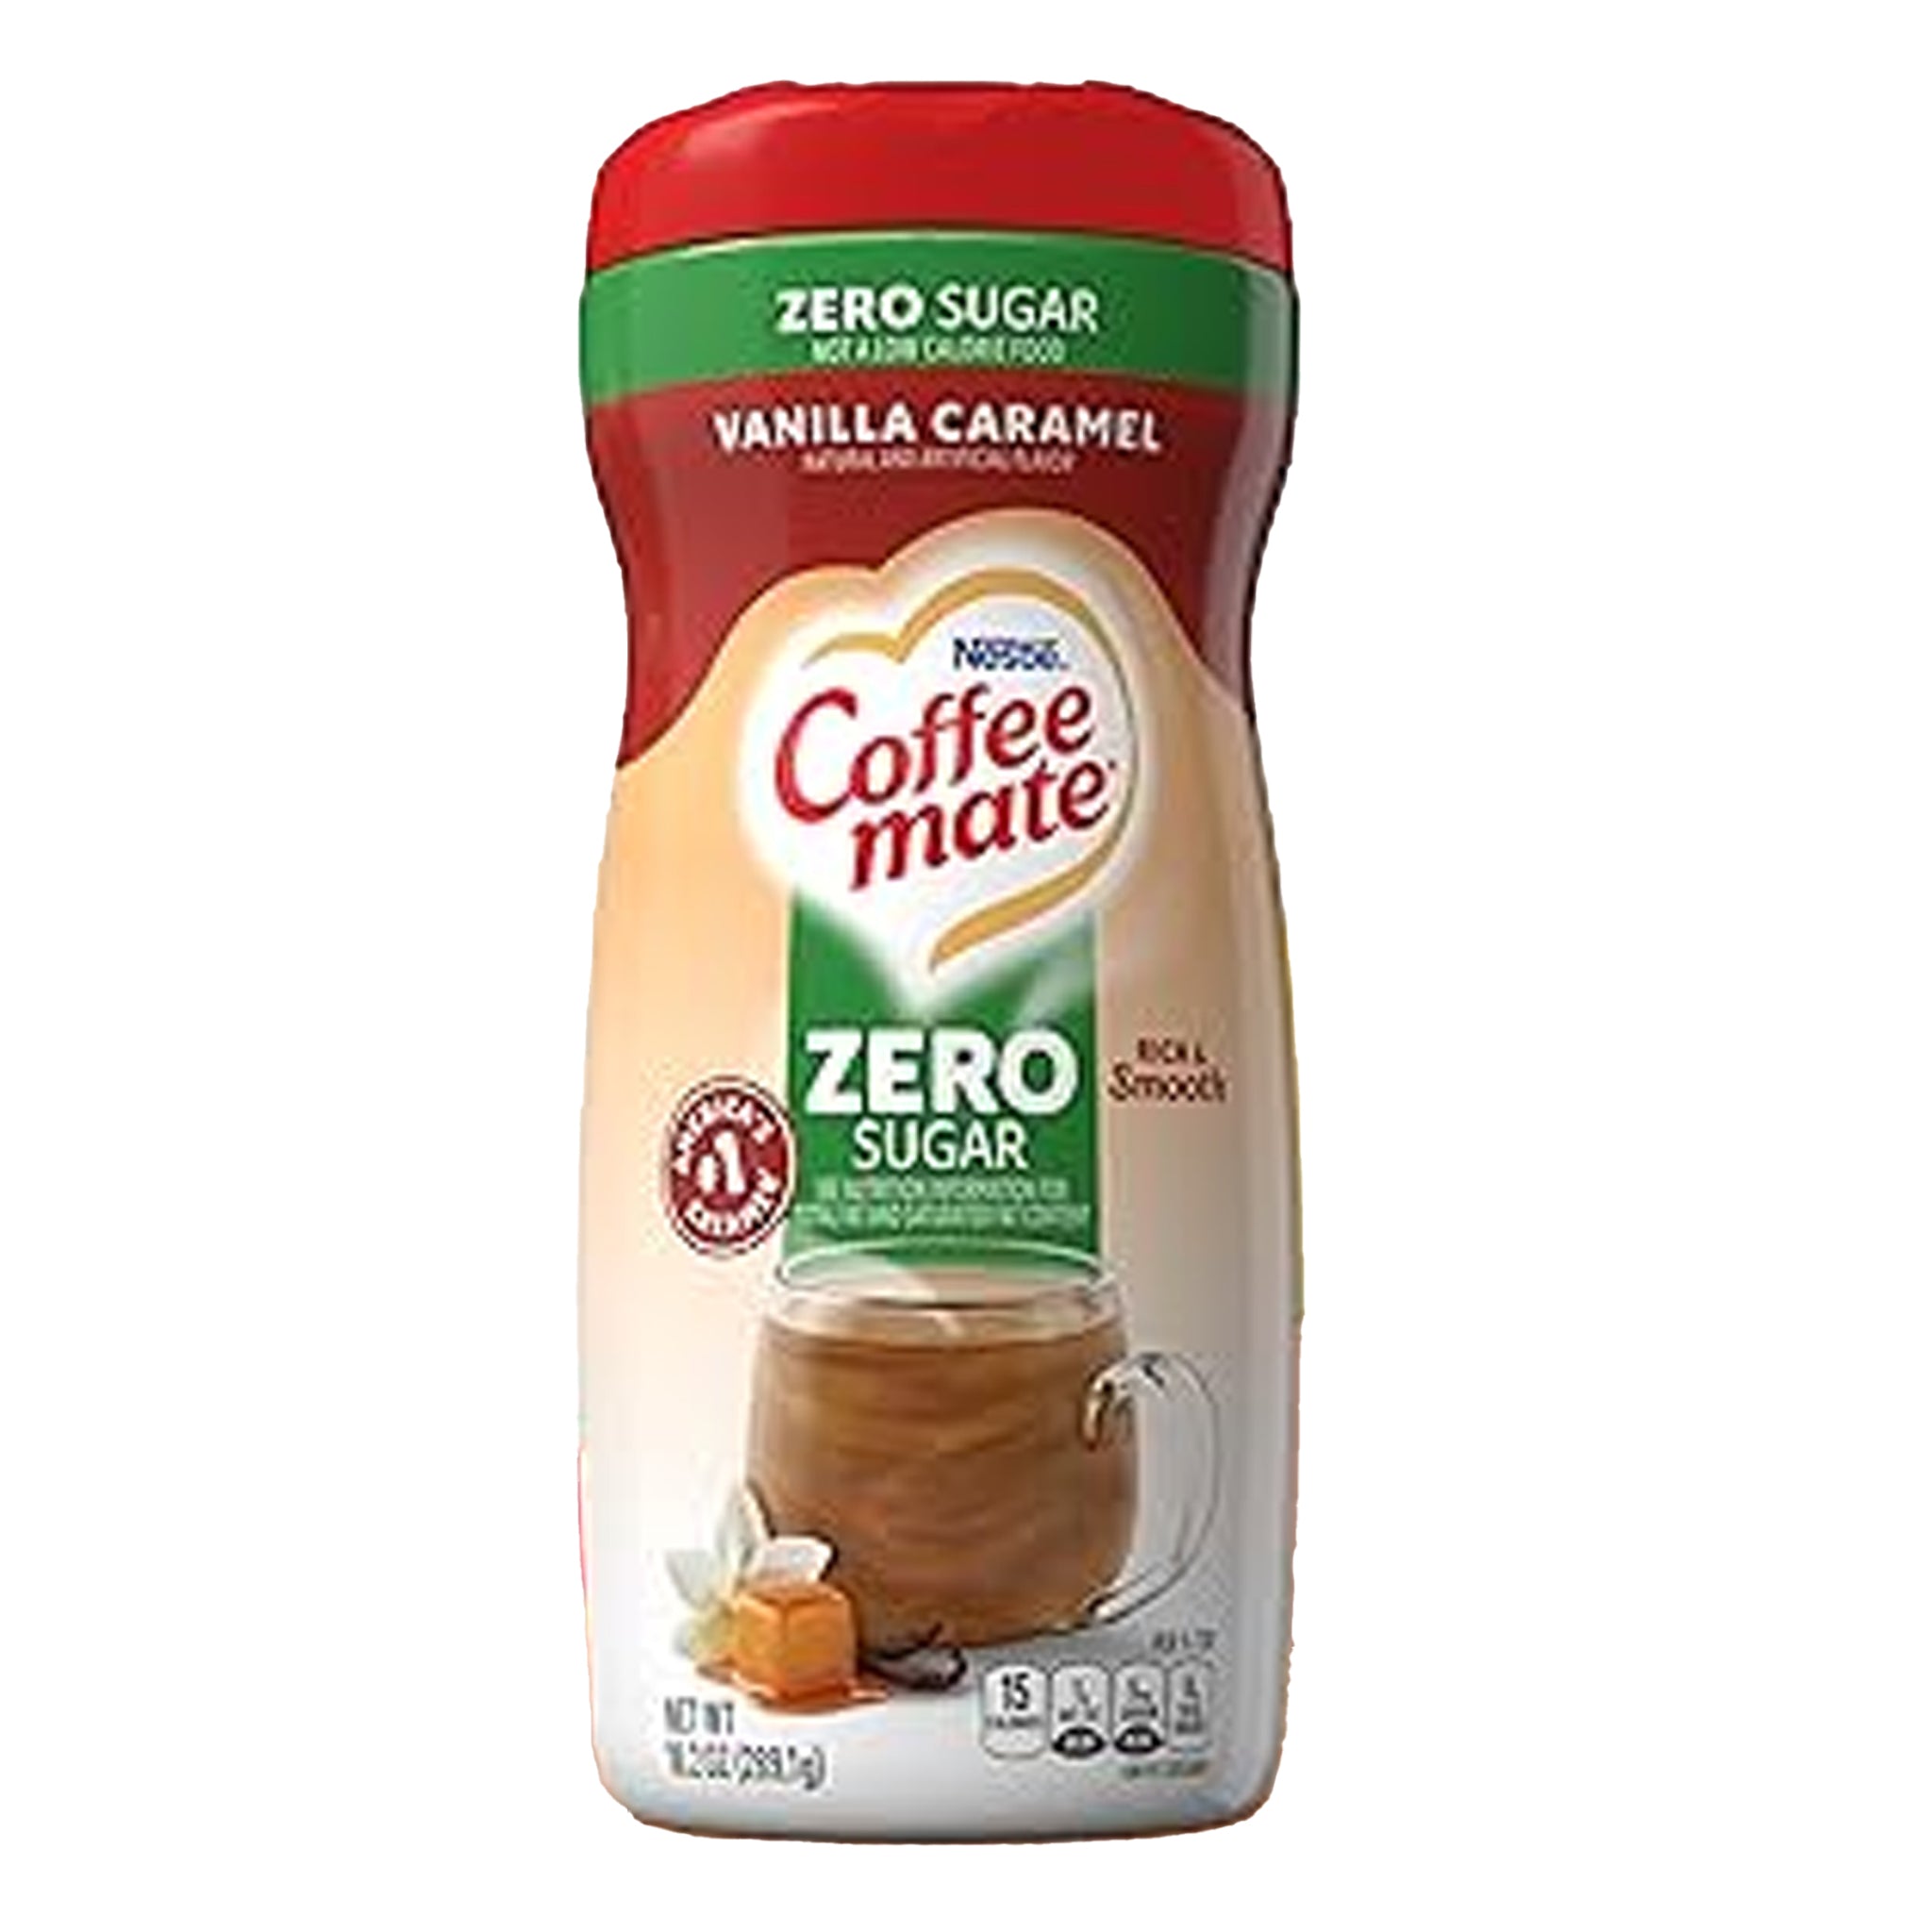 Coffee Mate Vanilla Caramel Zero מלבין קפה ללא סוכר בטעם וניל קרמל